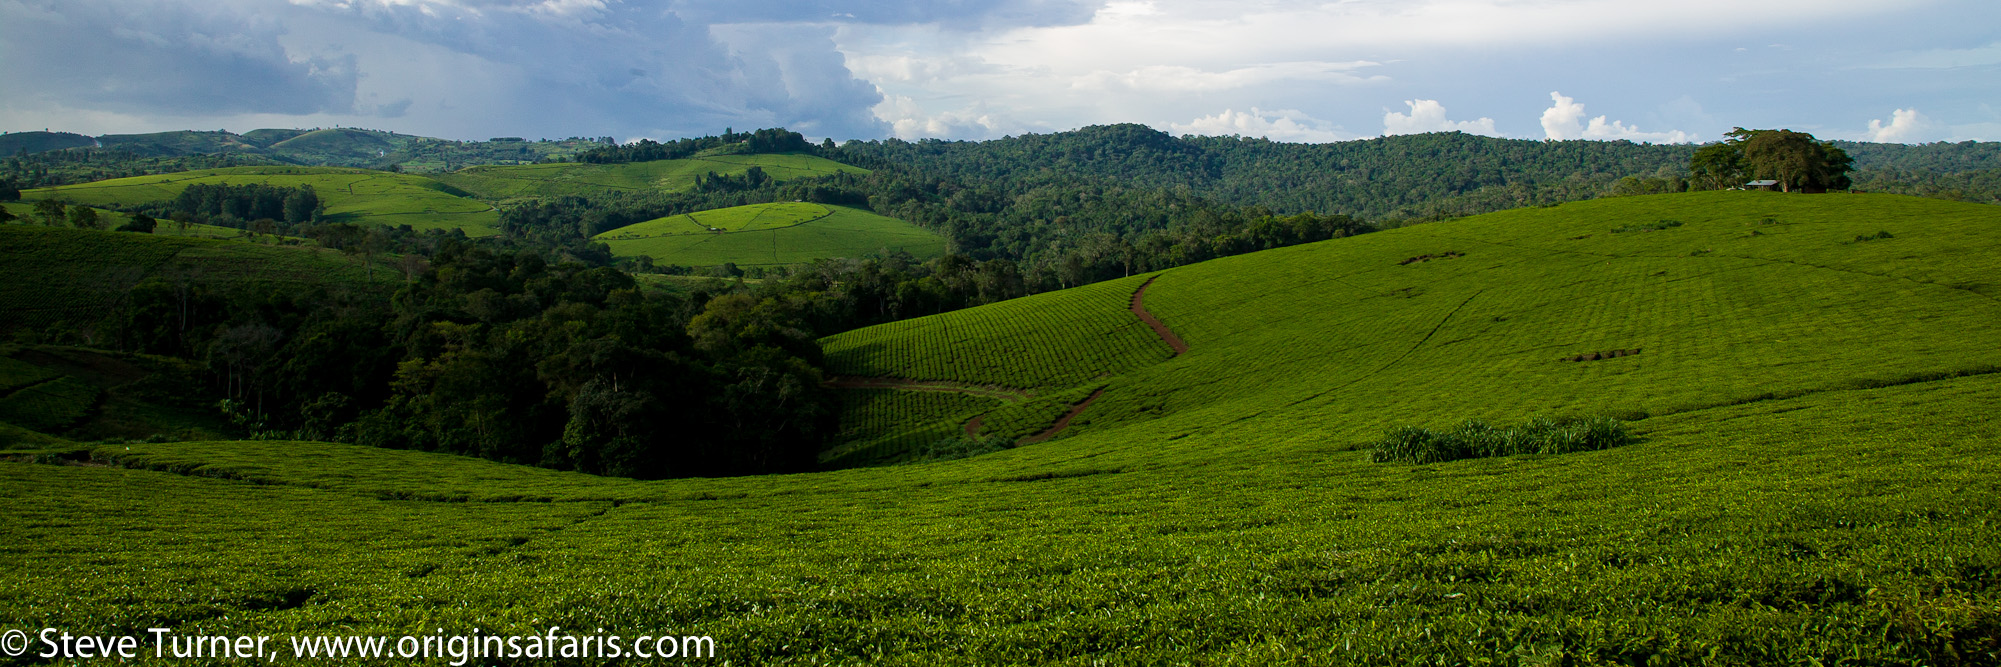 Tea plantations surround the forest.